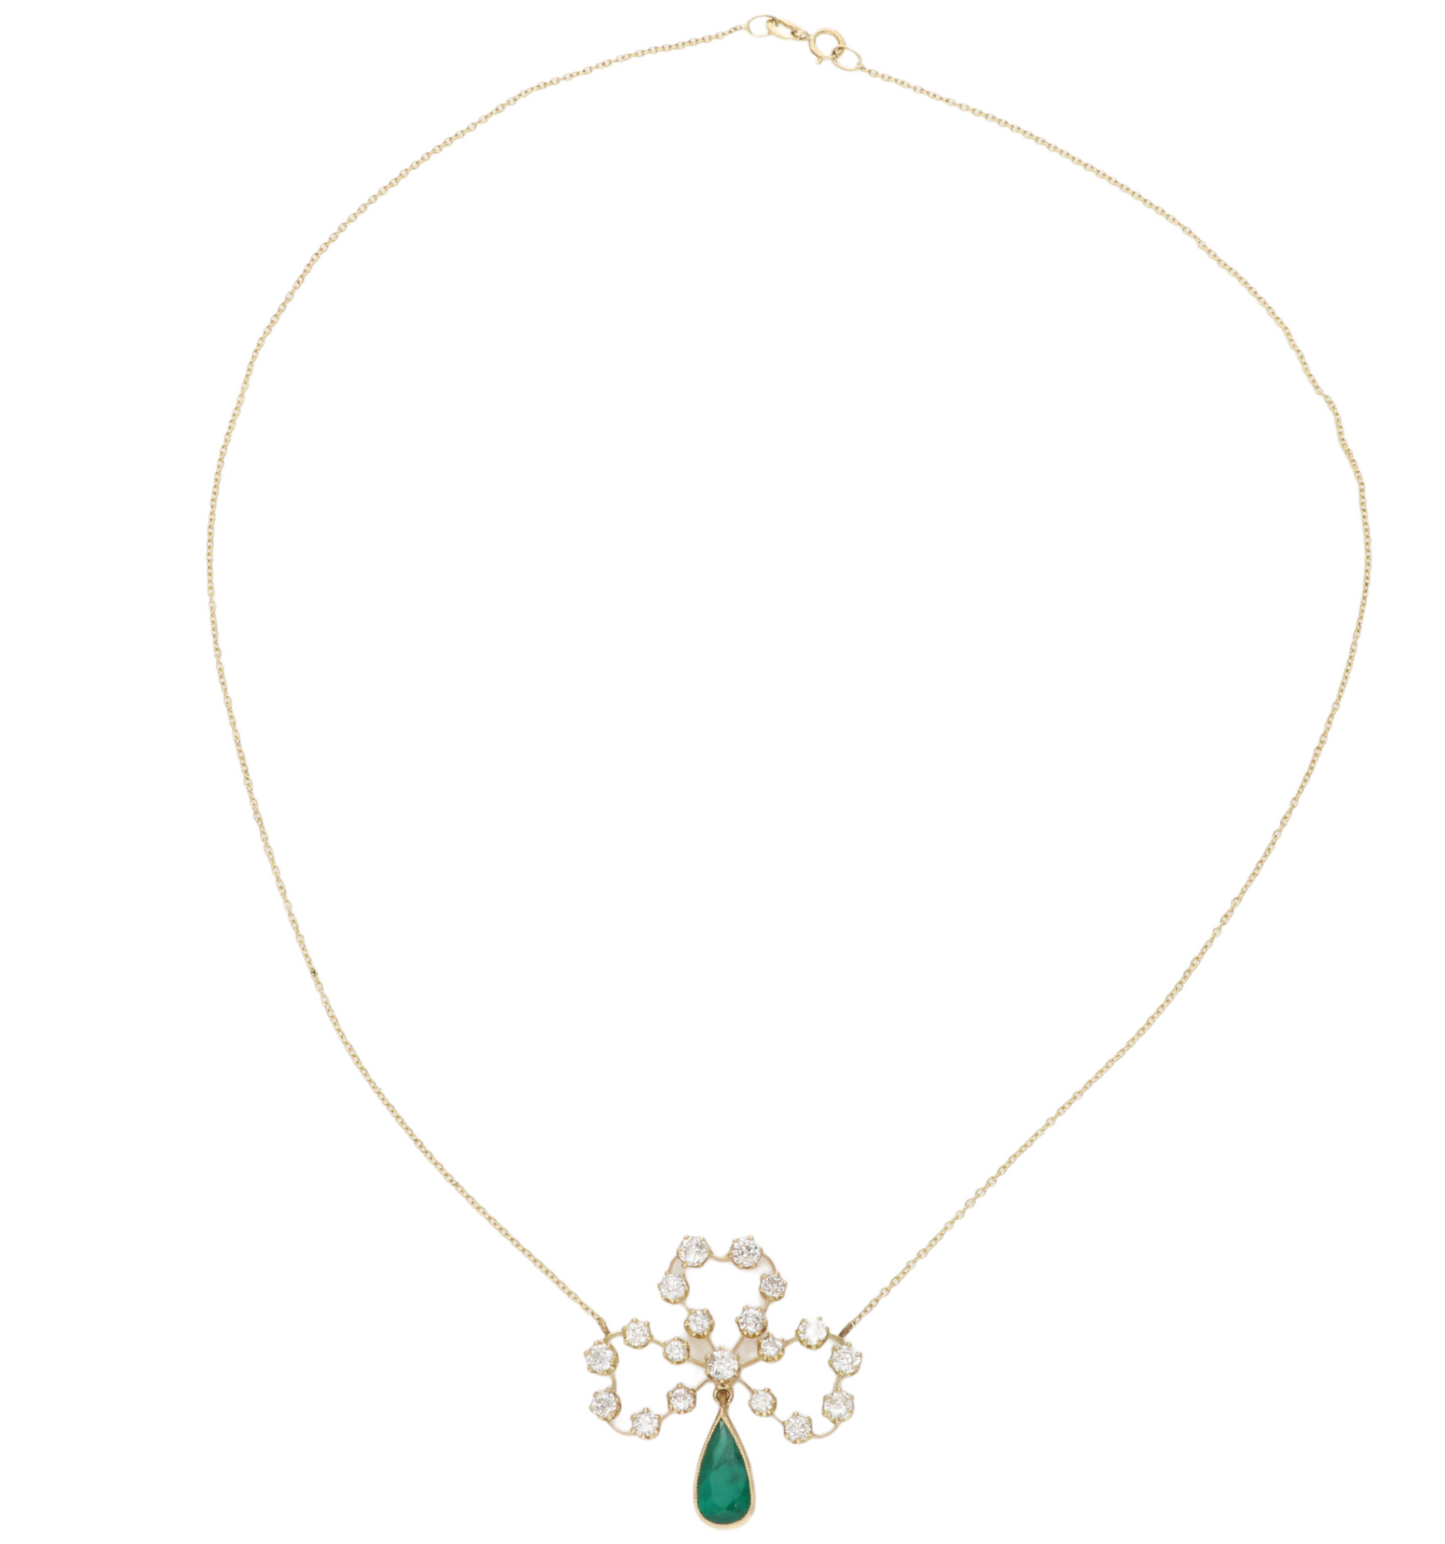 18ct emerald and old cut diamond shamrock pendant necklace